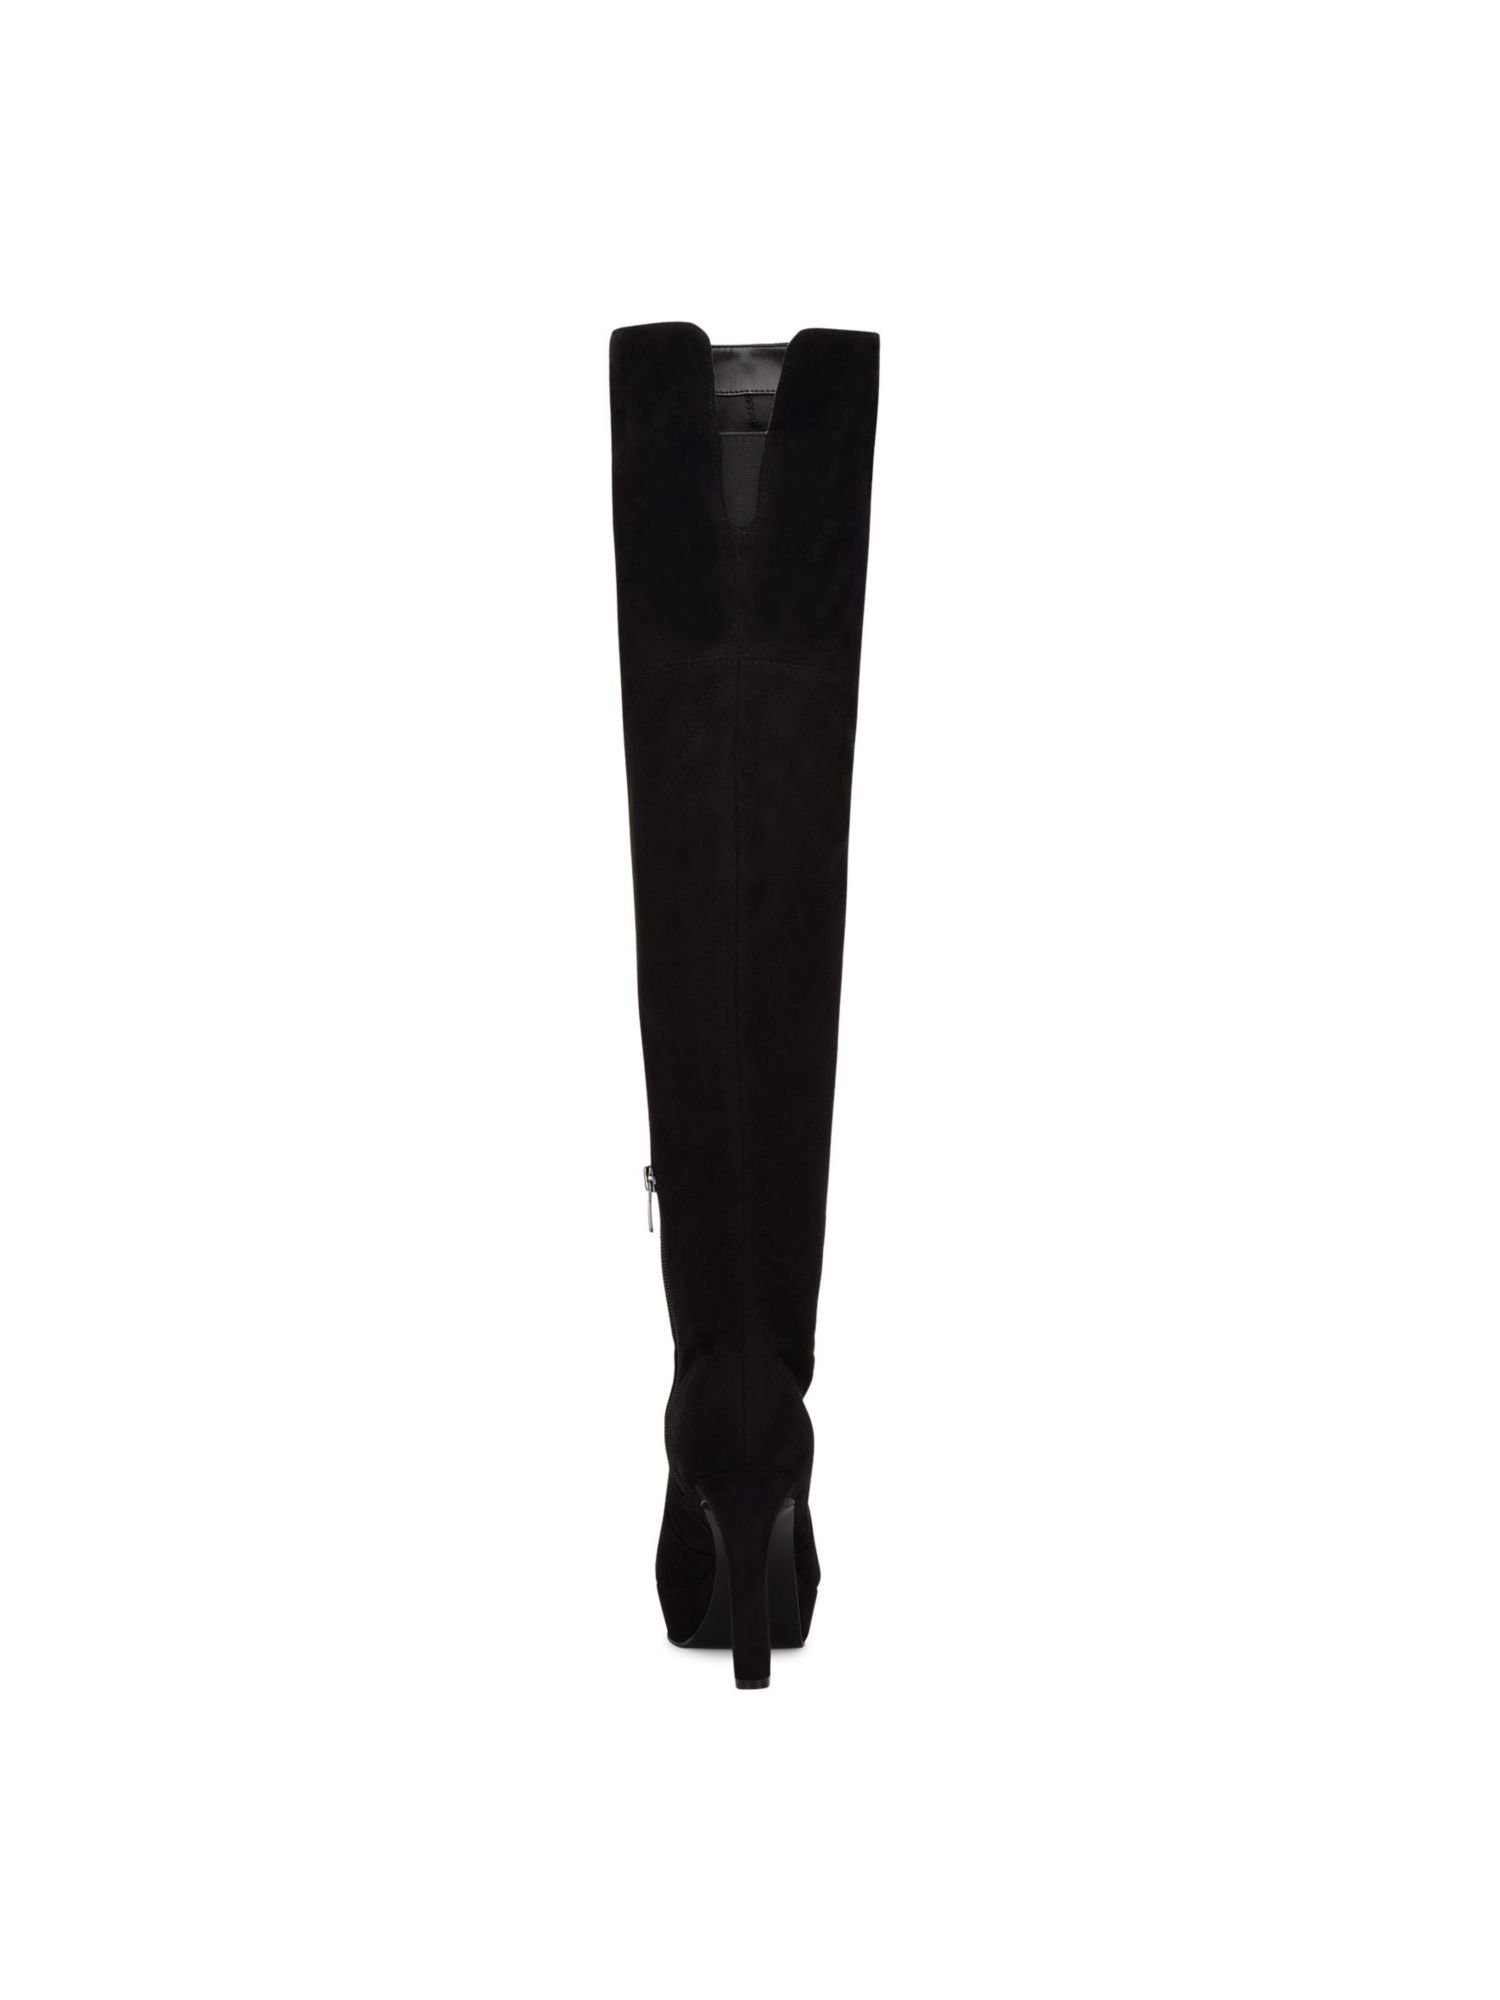 NINE WEST Womens Black 1" Platform Goring Padded Gotcha Round Toe Stiletto Zip-Up Heeled Boots 9 M